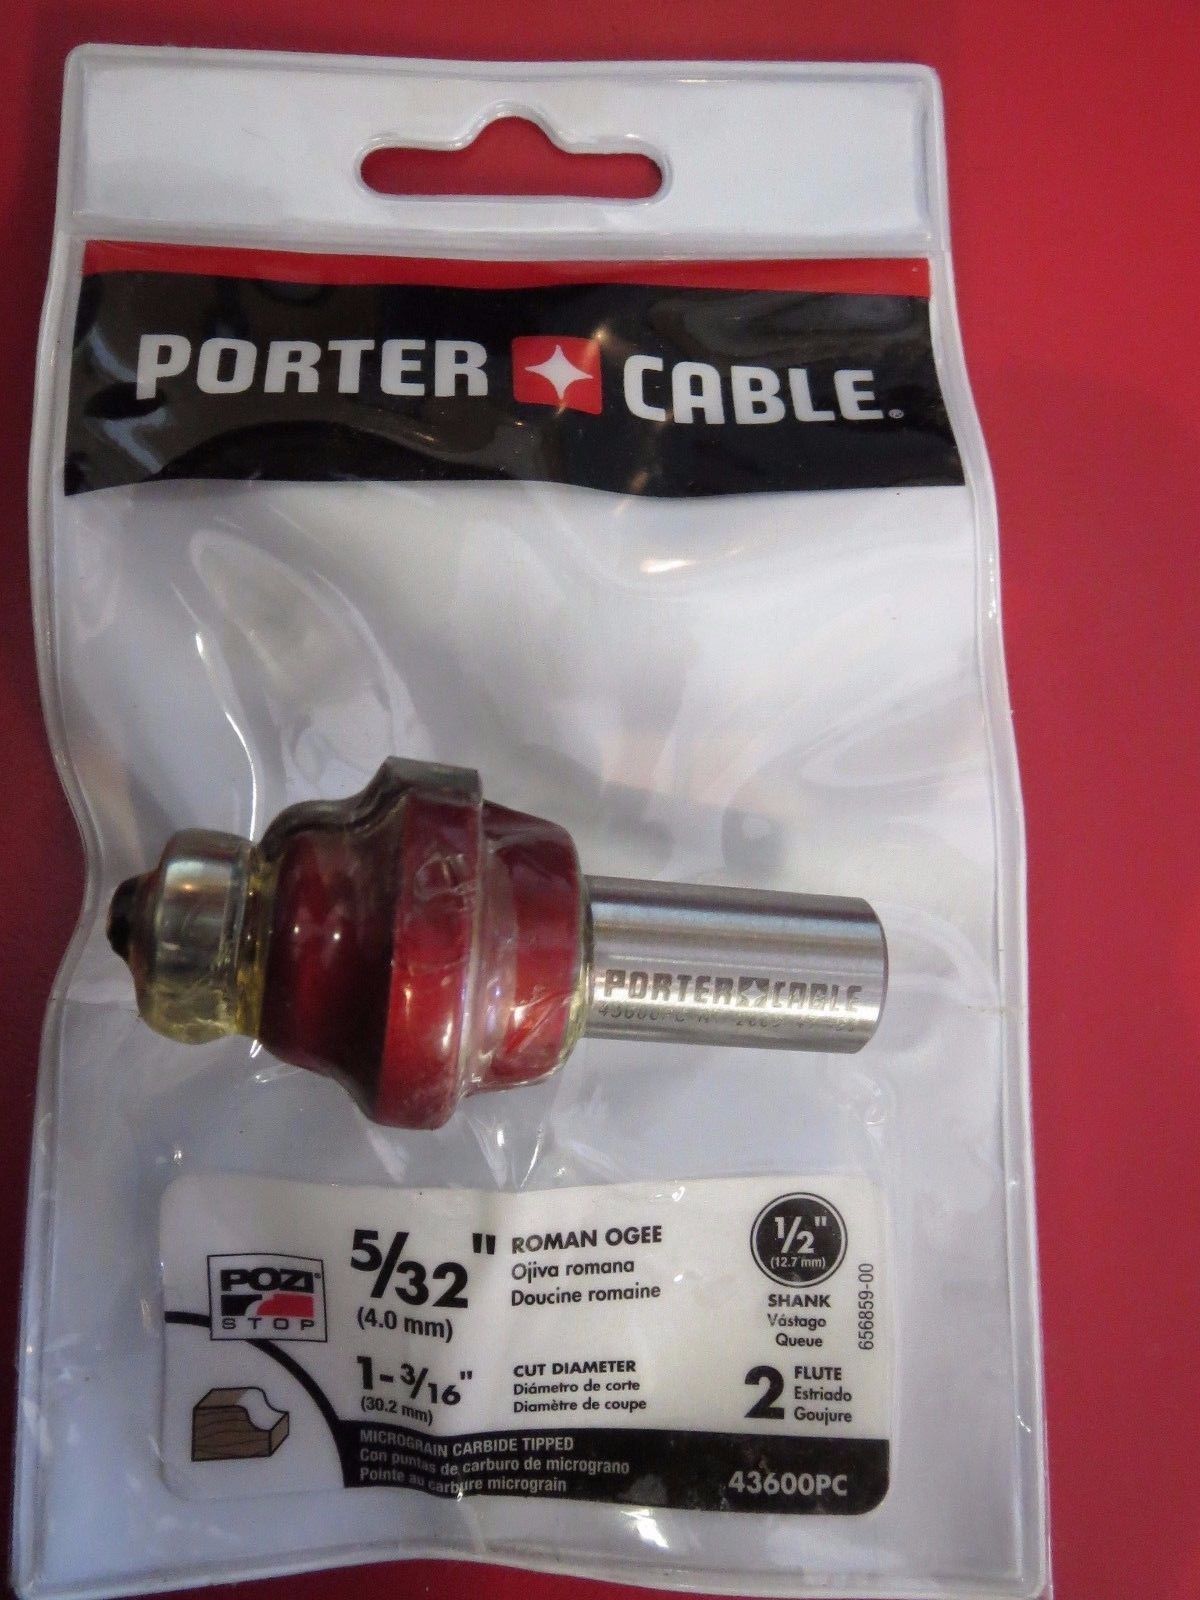 Porter Cable 43600 5/32" Roman Ogee Router Bit *Kr3